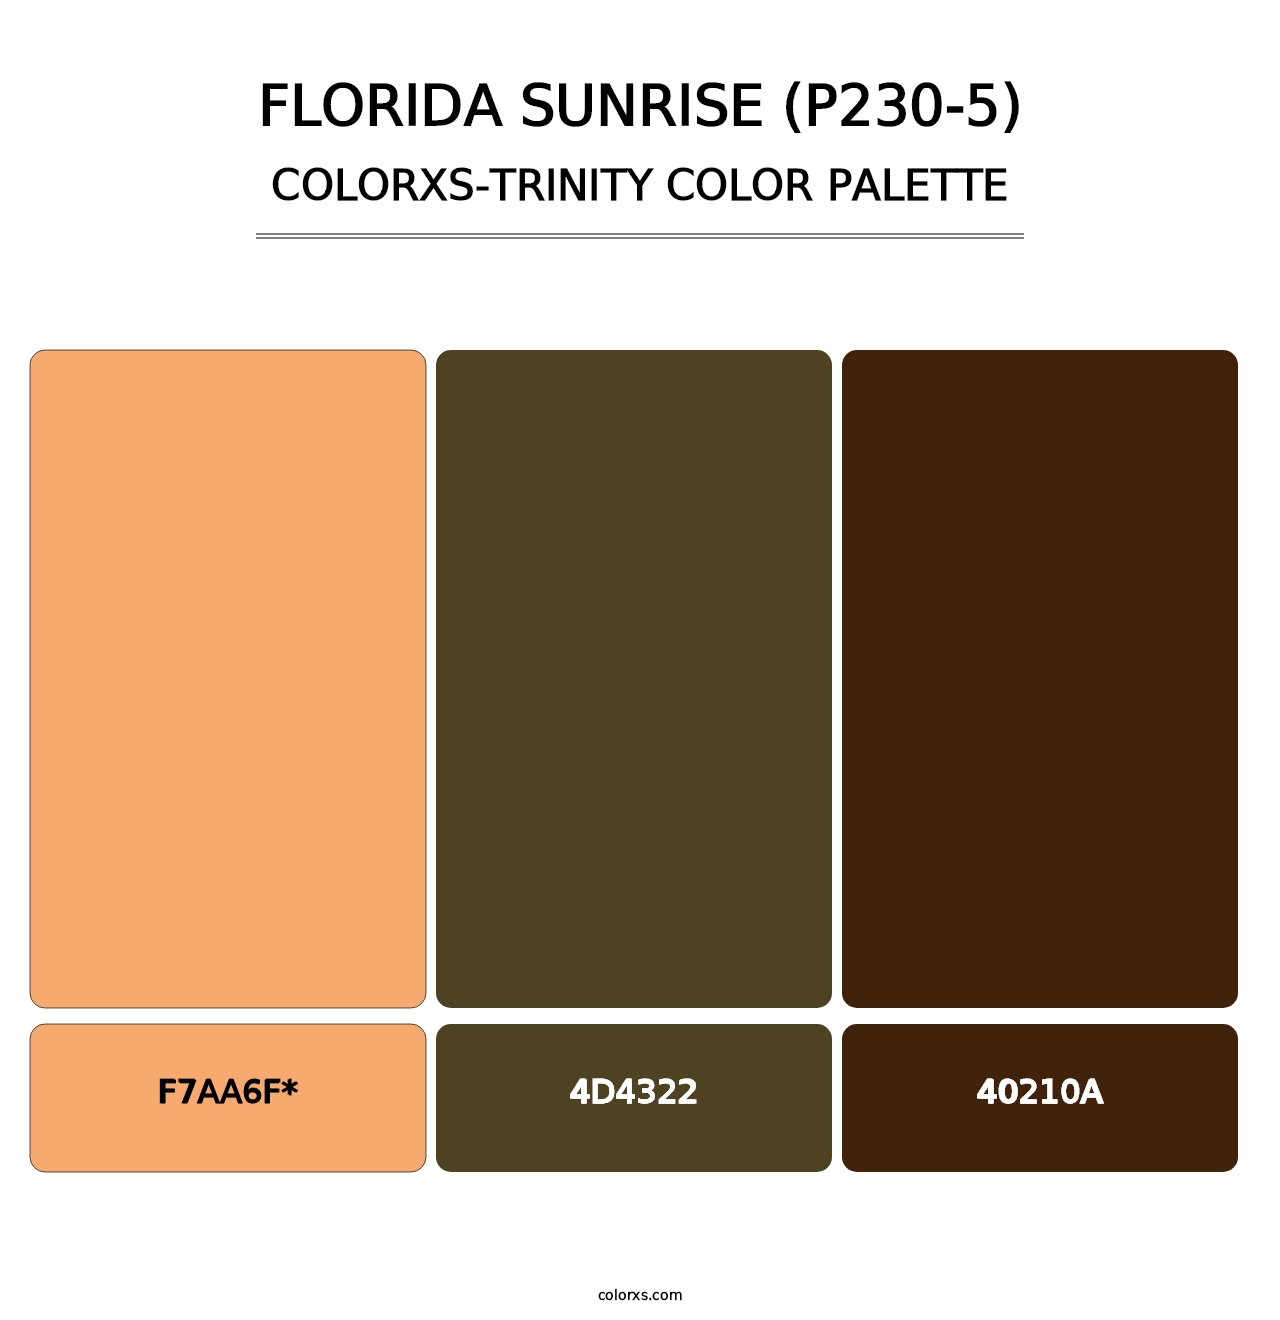 Florida Sunrise (P230-5) - Colorxs Trinity Palette